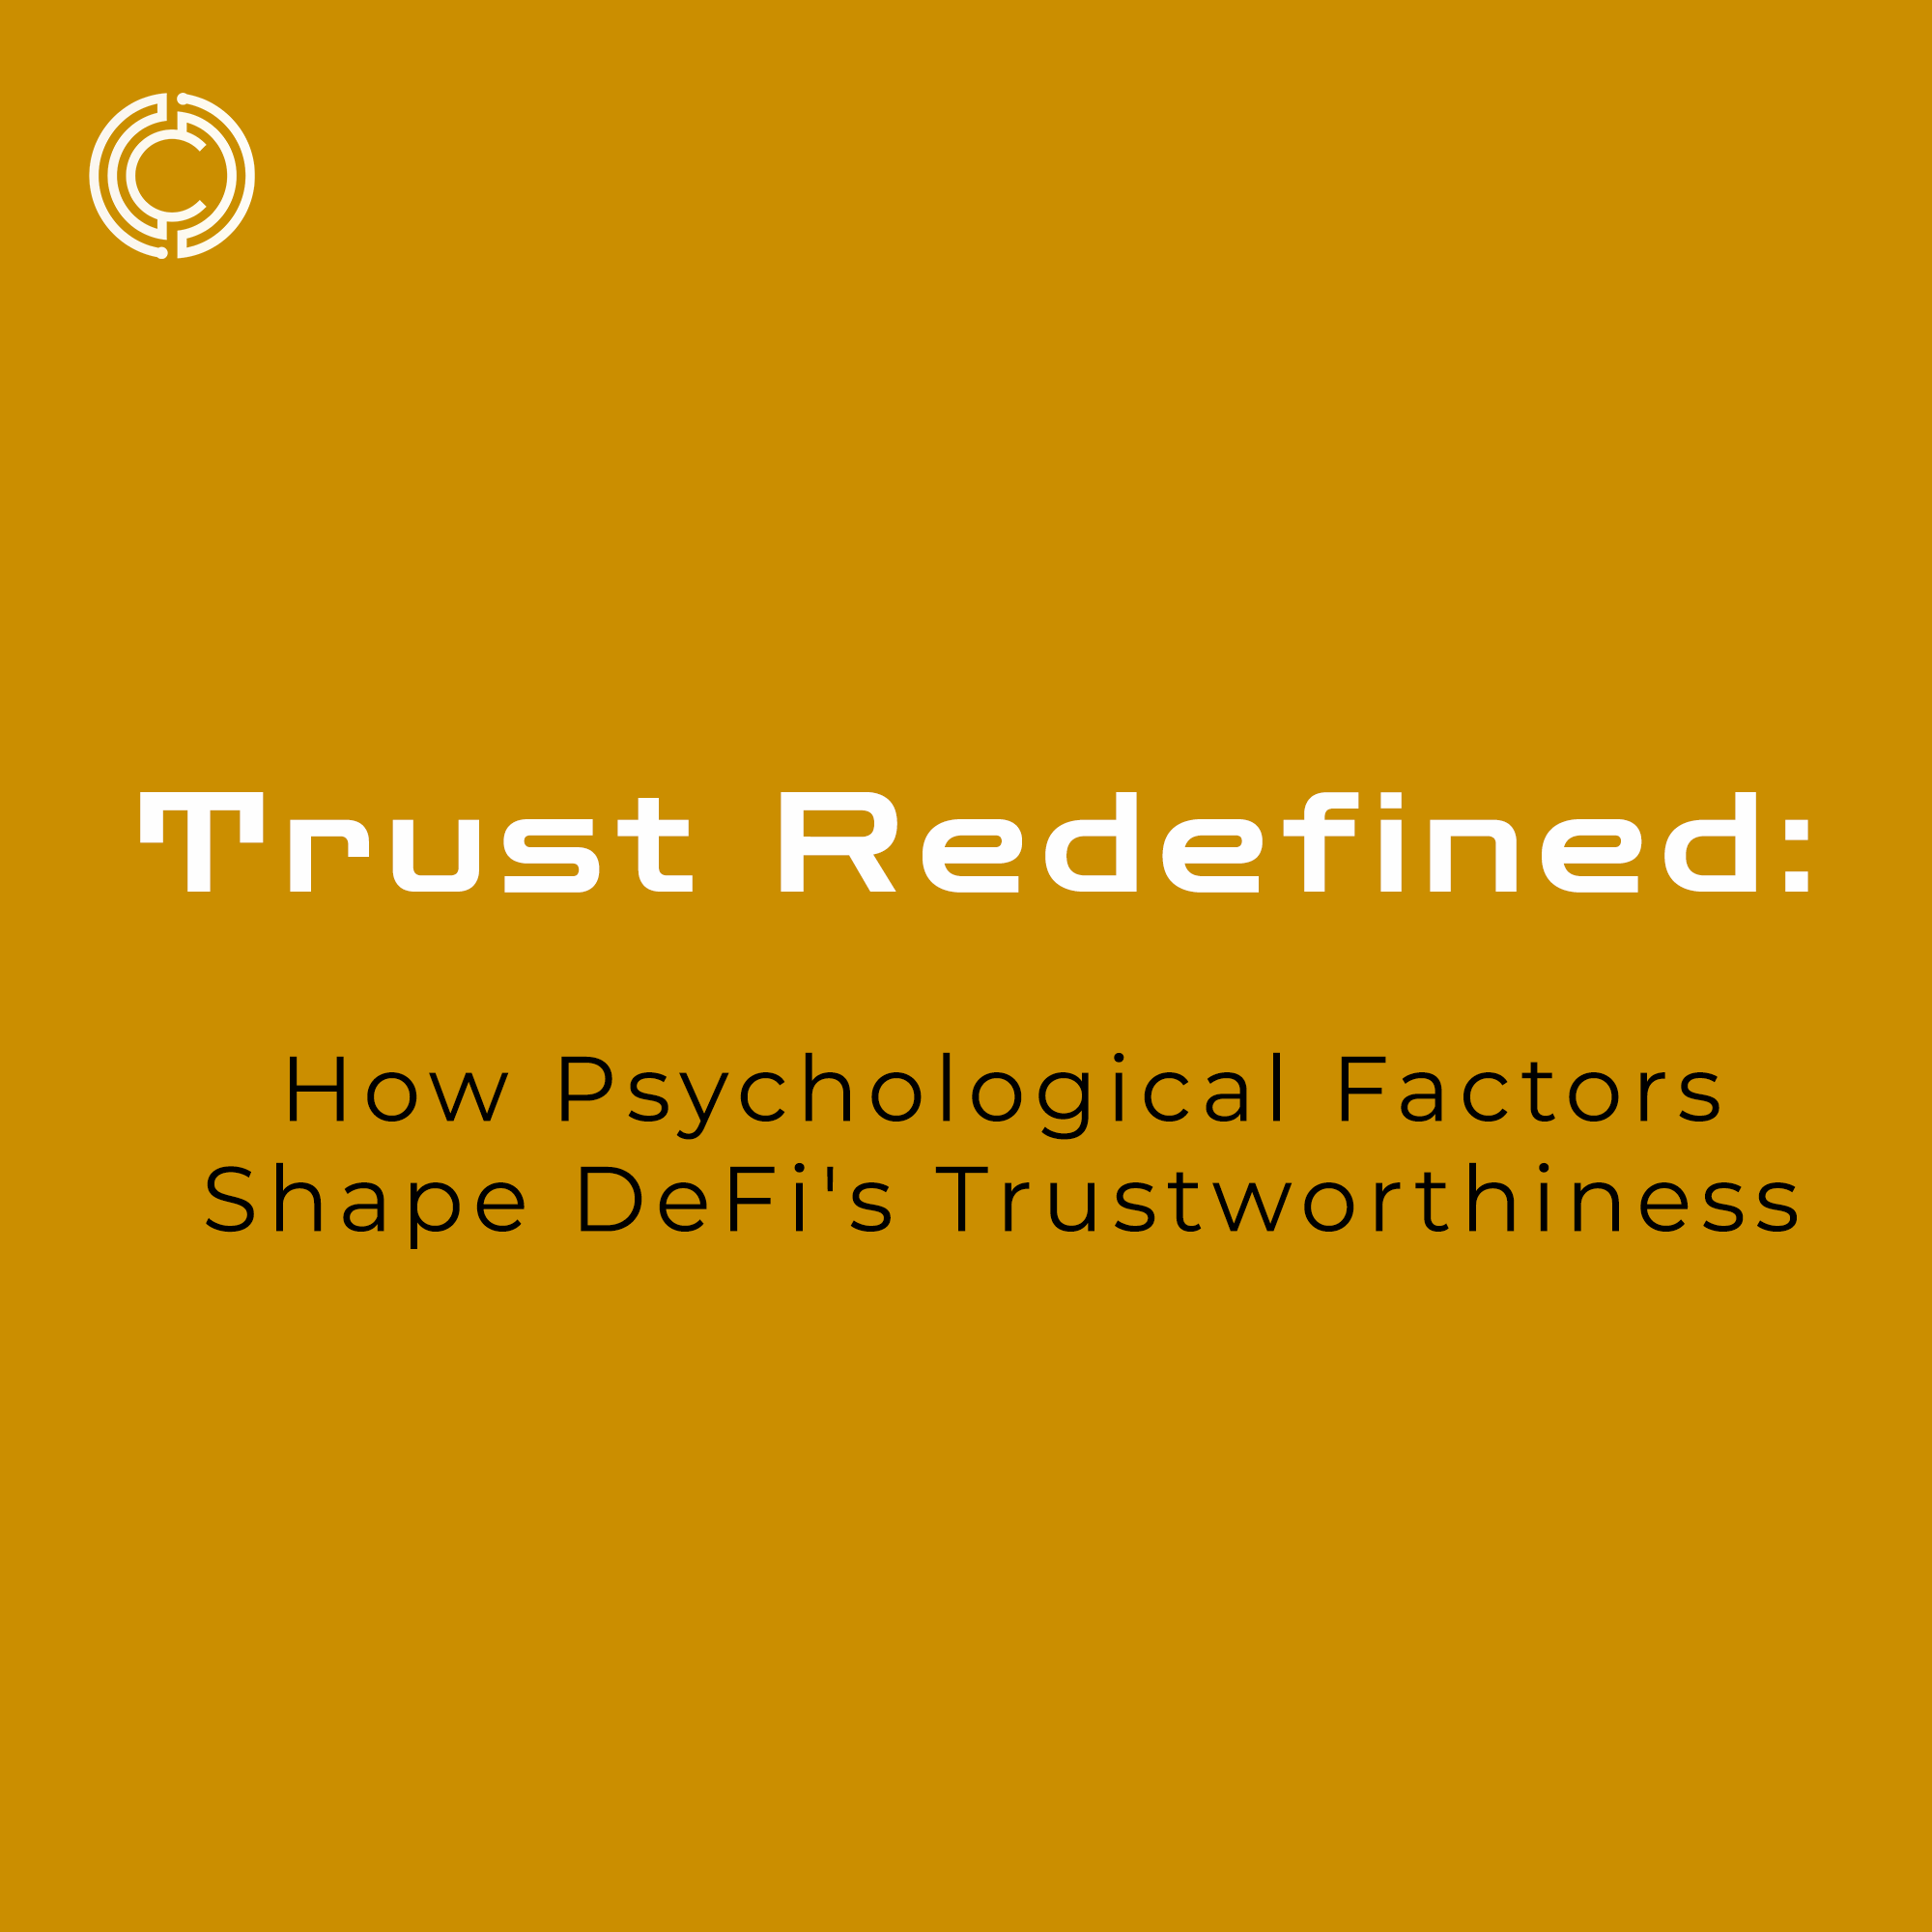 Trust Redefined: How Psychological Factors Shape DeFi’s Trustworthiness